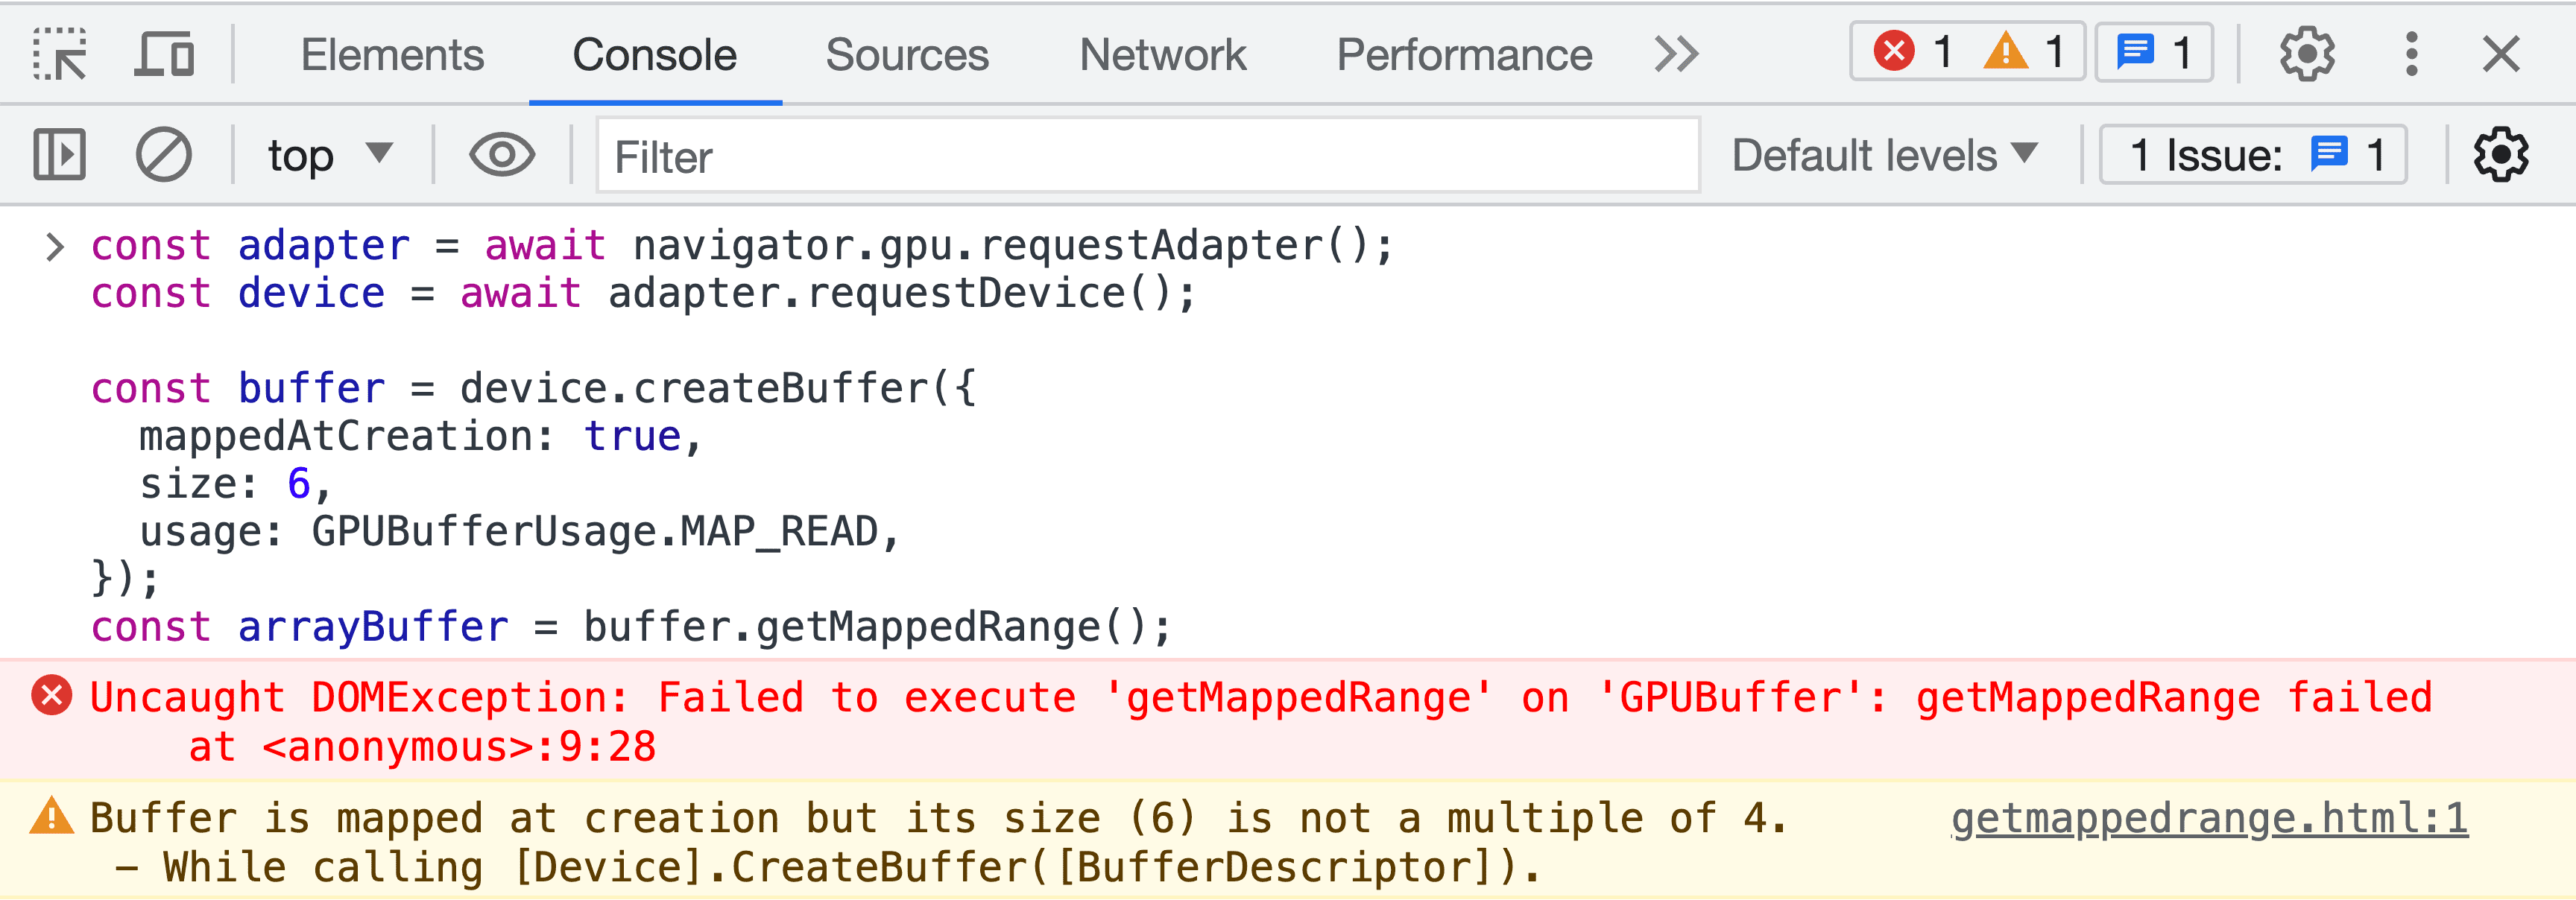 Screenshot of DevTools JavaScript console featuring buffer validation error message.